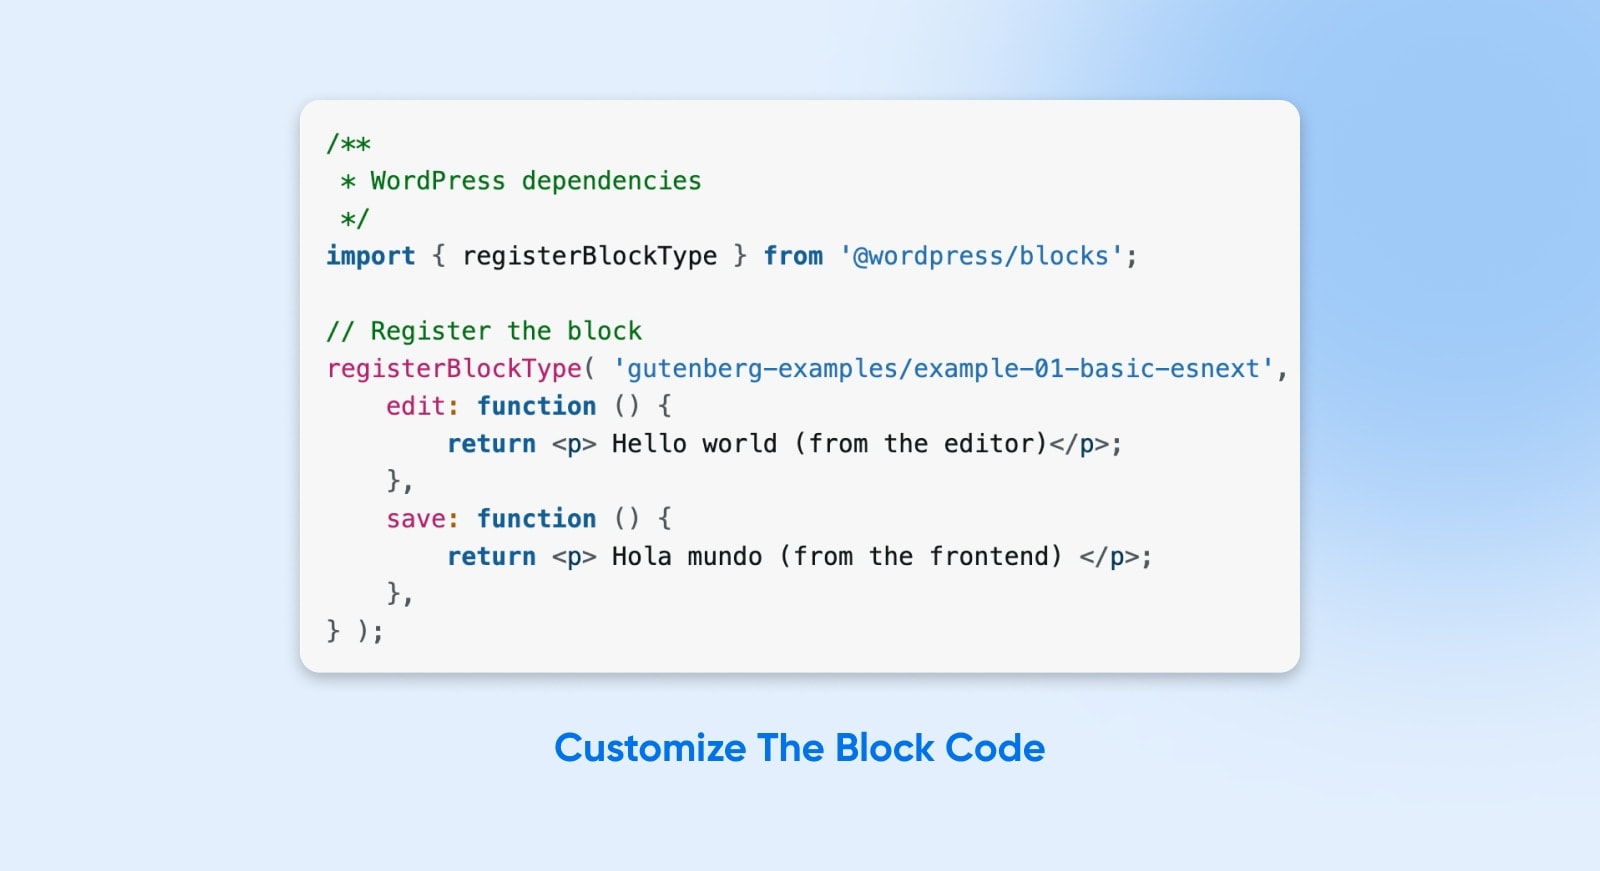 Customize the Block Code